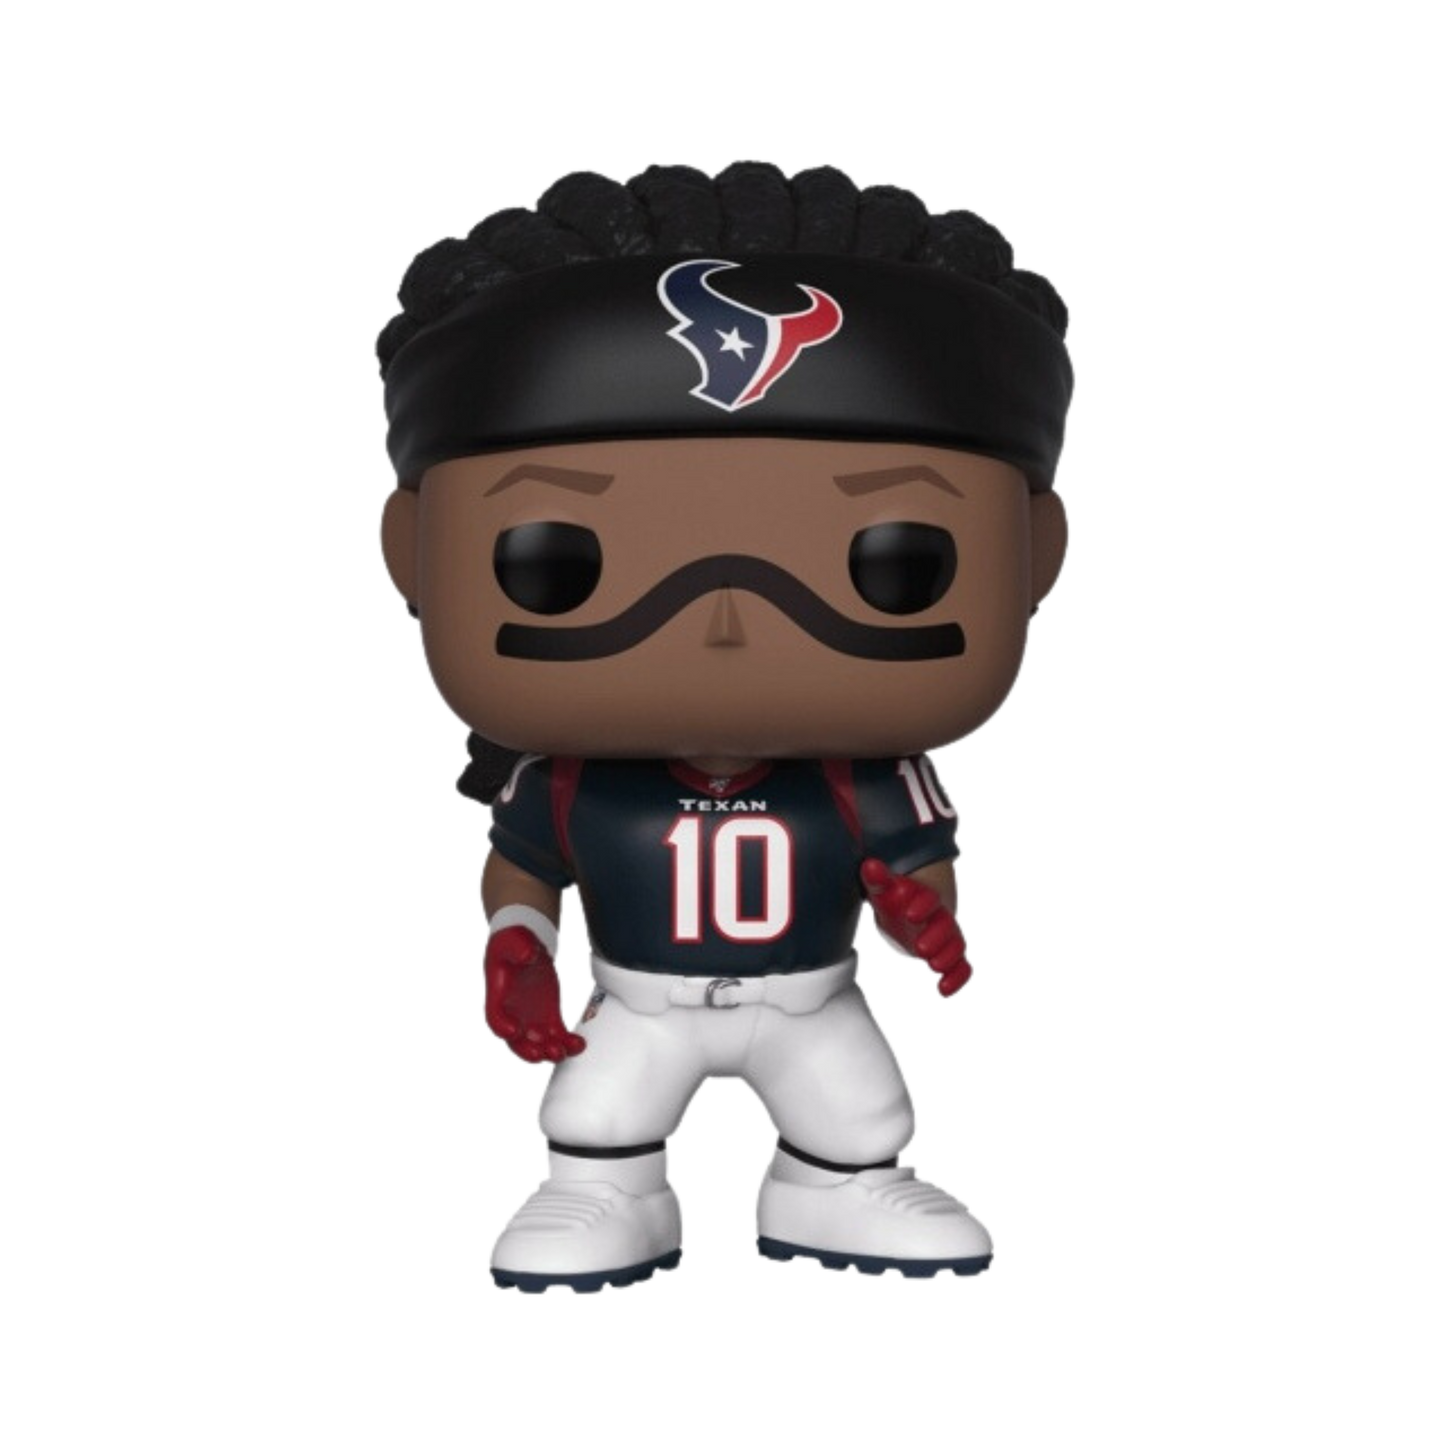 POP! Football: Houston Texans - DeAndre Hopkins #122 (NFL)